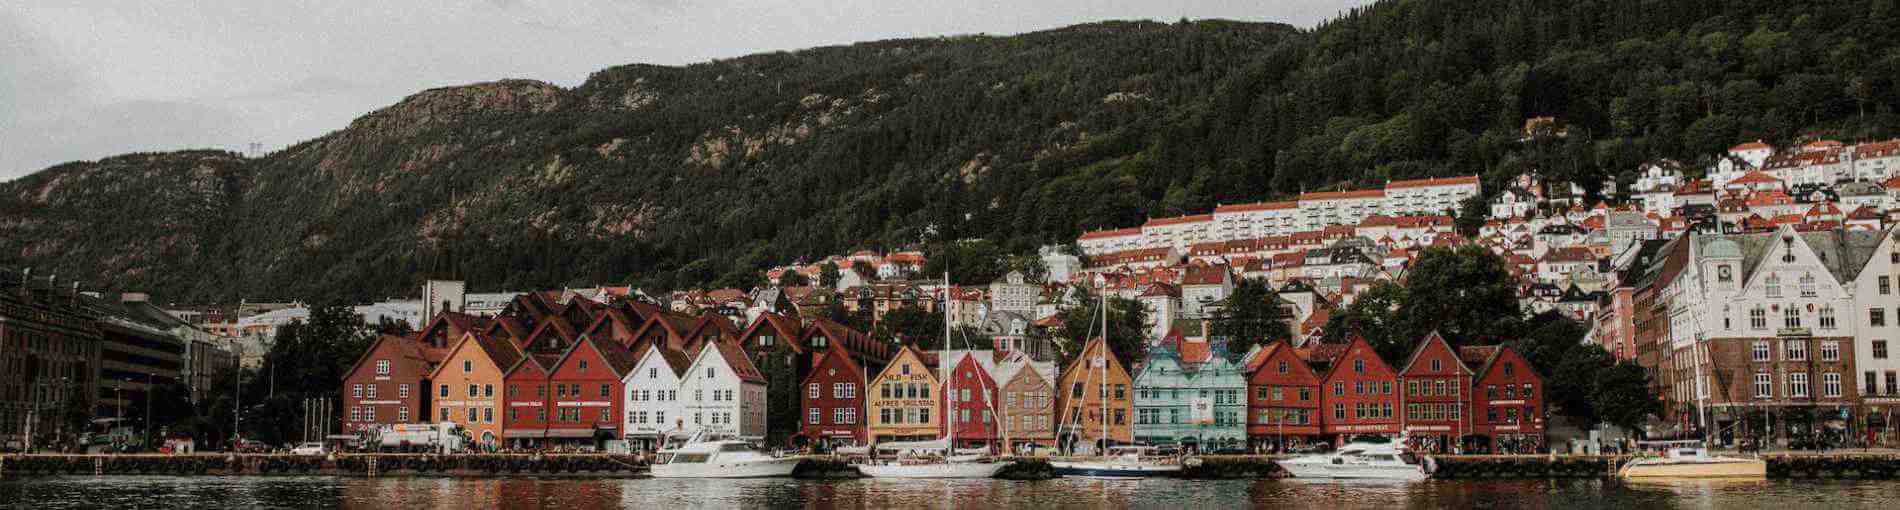 Bergen waterfront in Norway